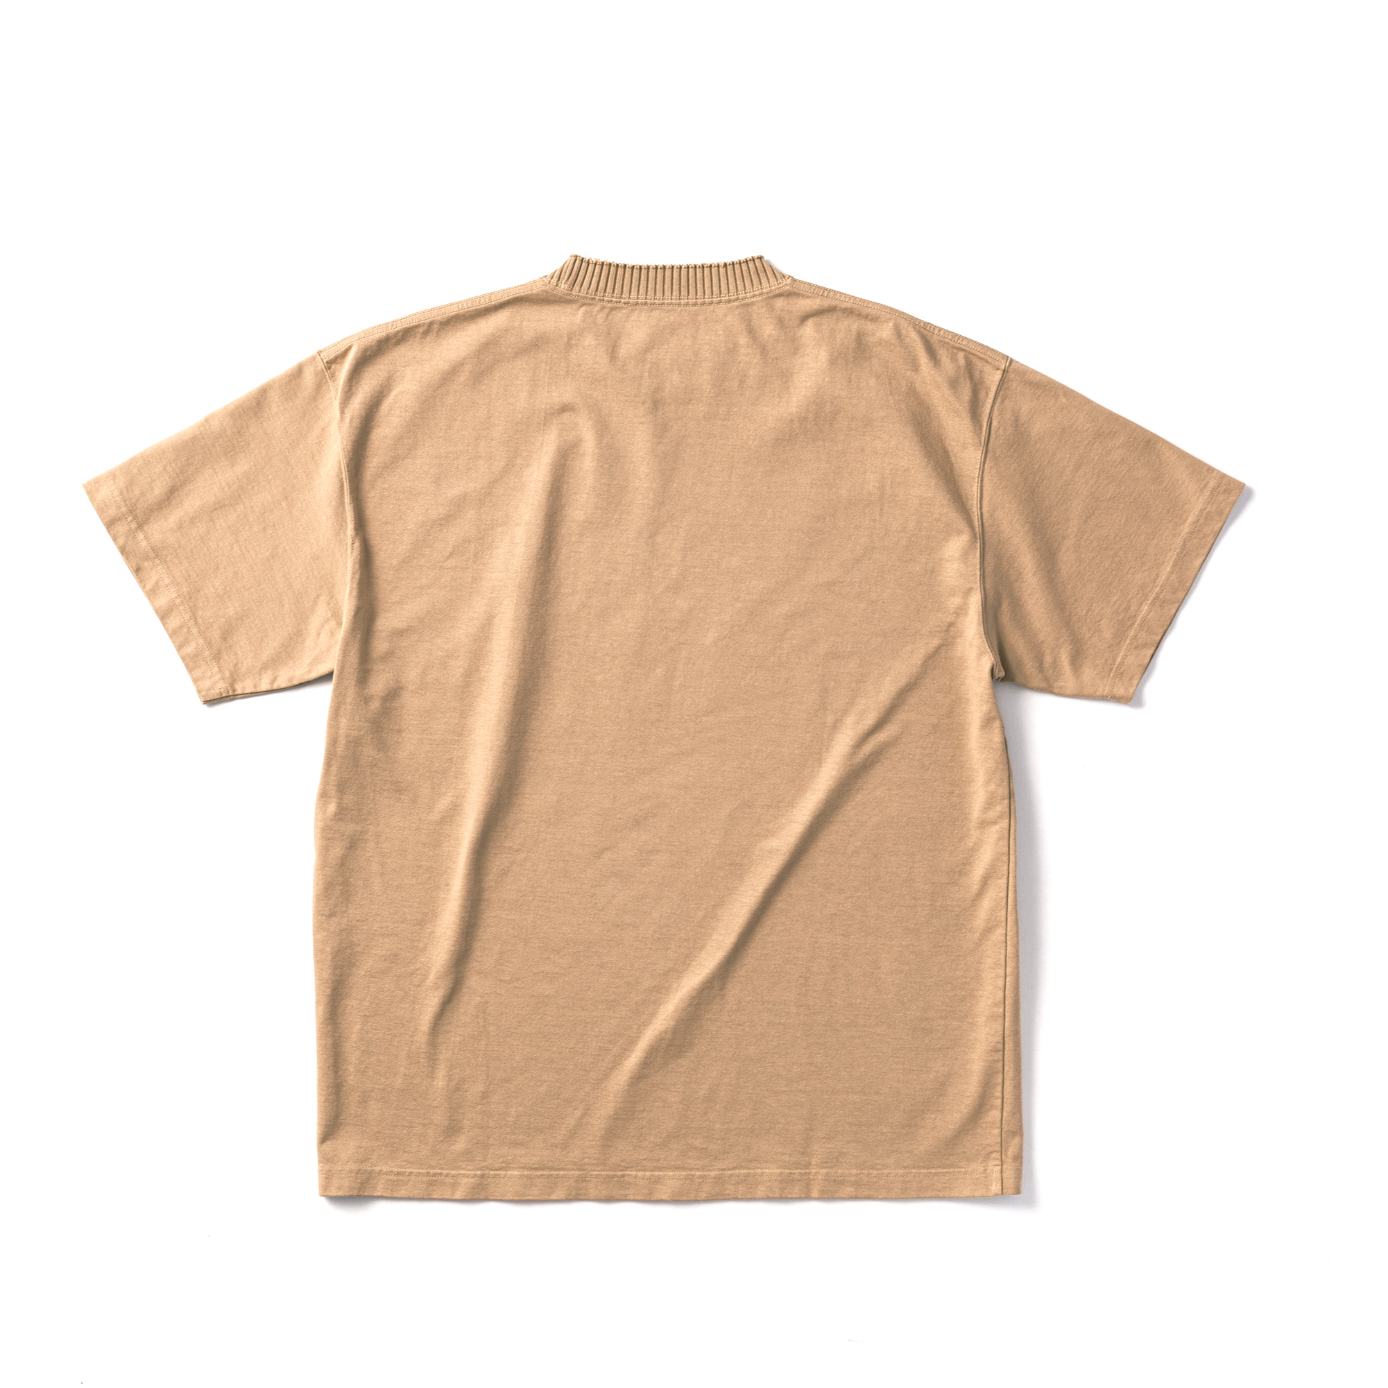 Basic Short Sleeve T Shirts /Light Brown (ベーシックショートスリーブ ティーシャツ/ライトブラウン)